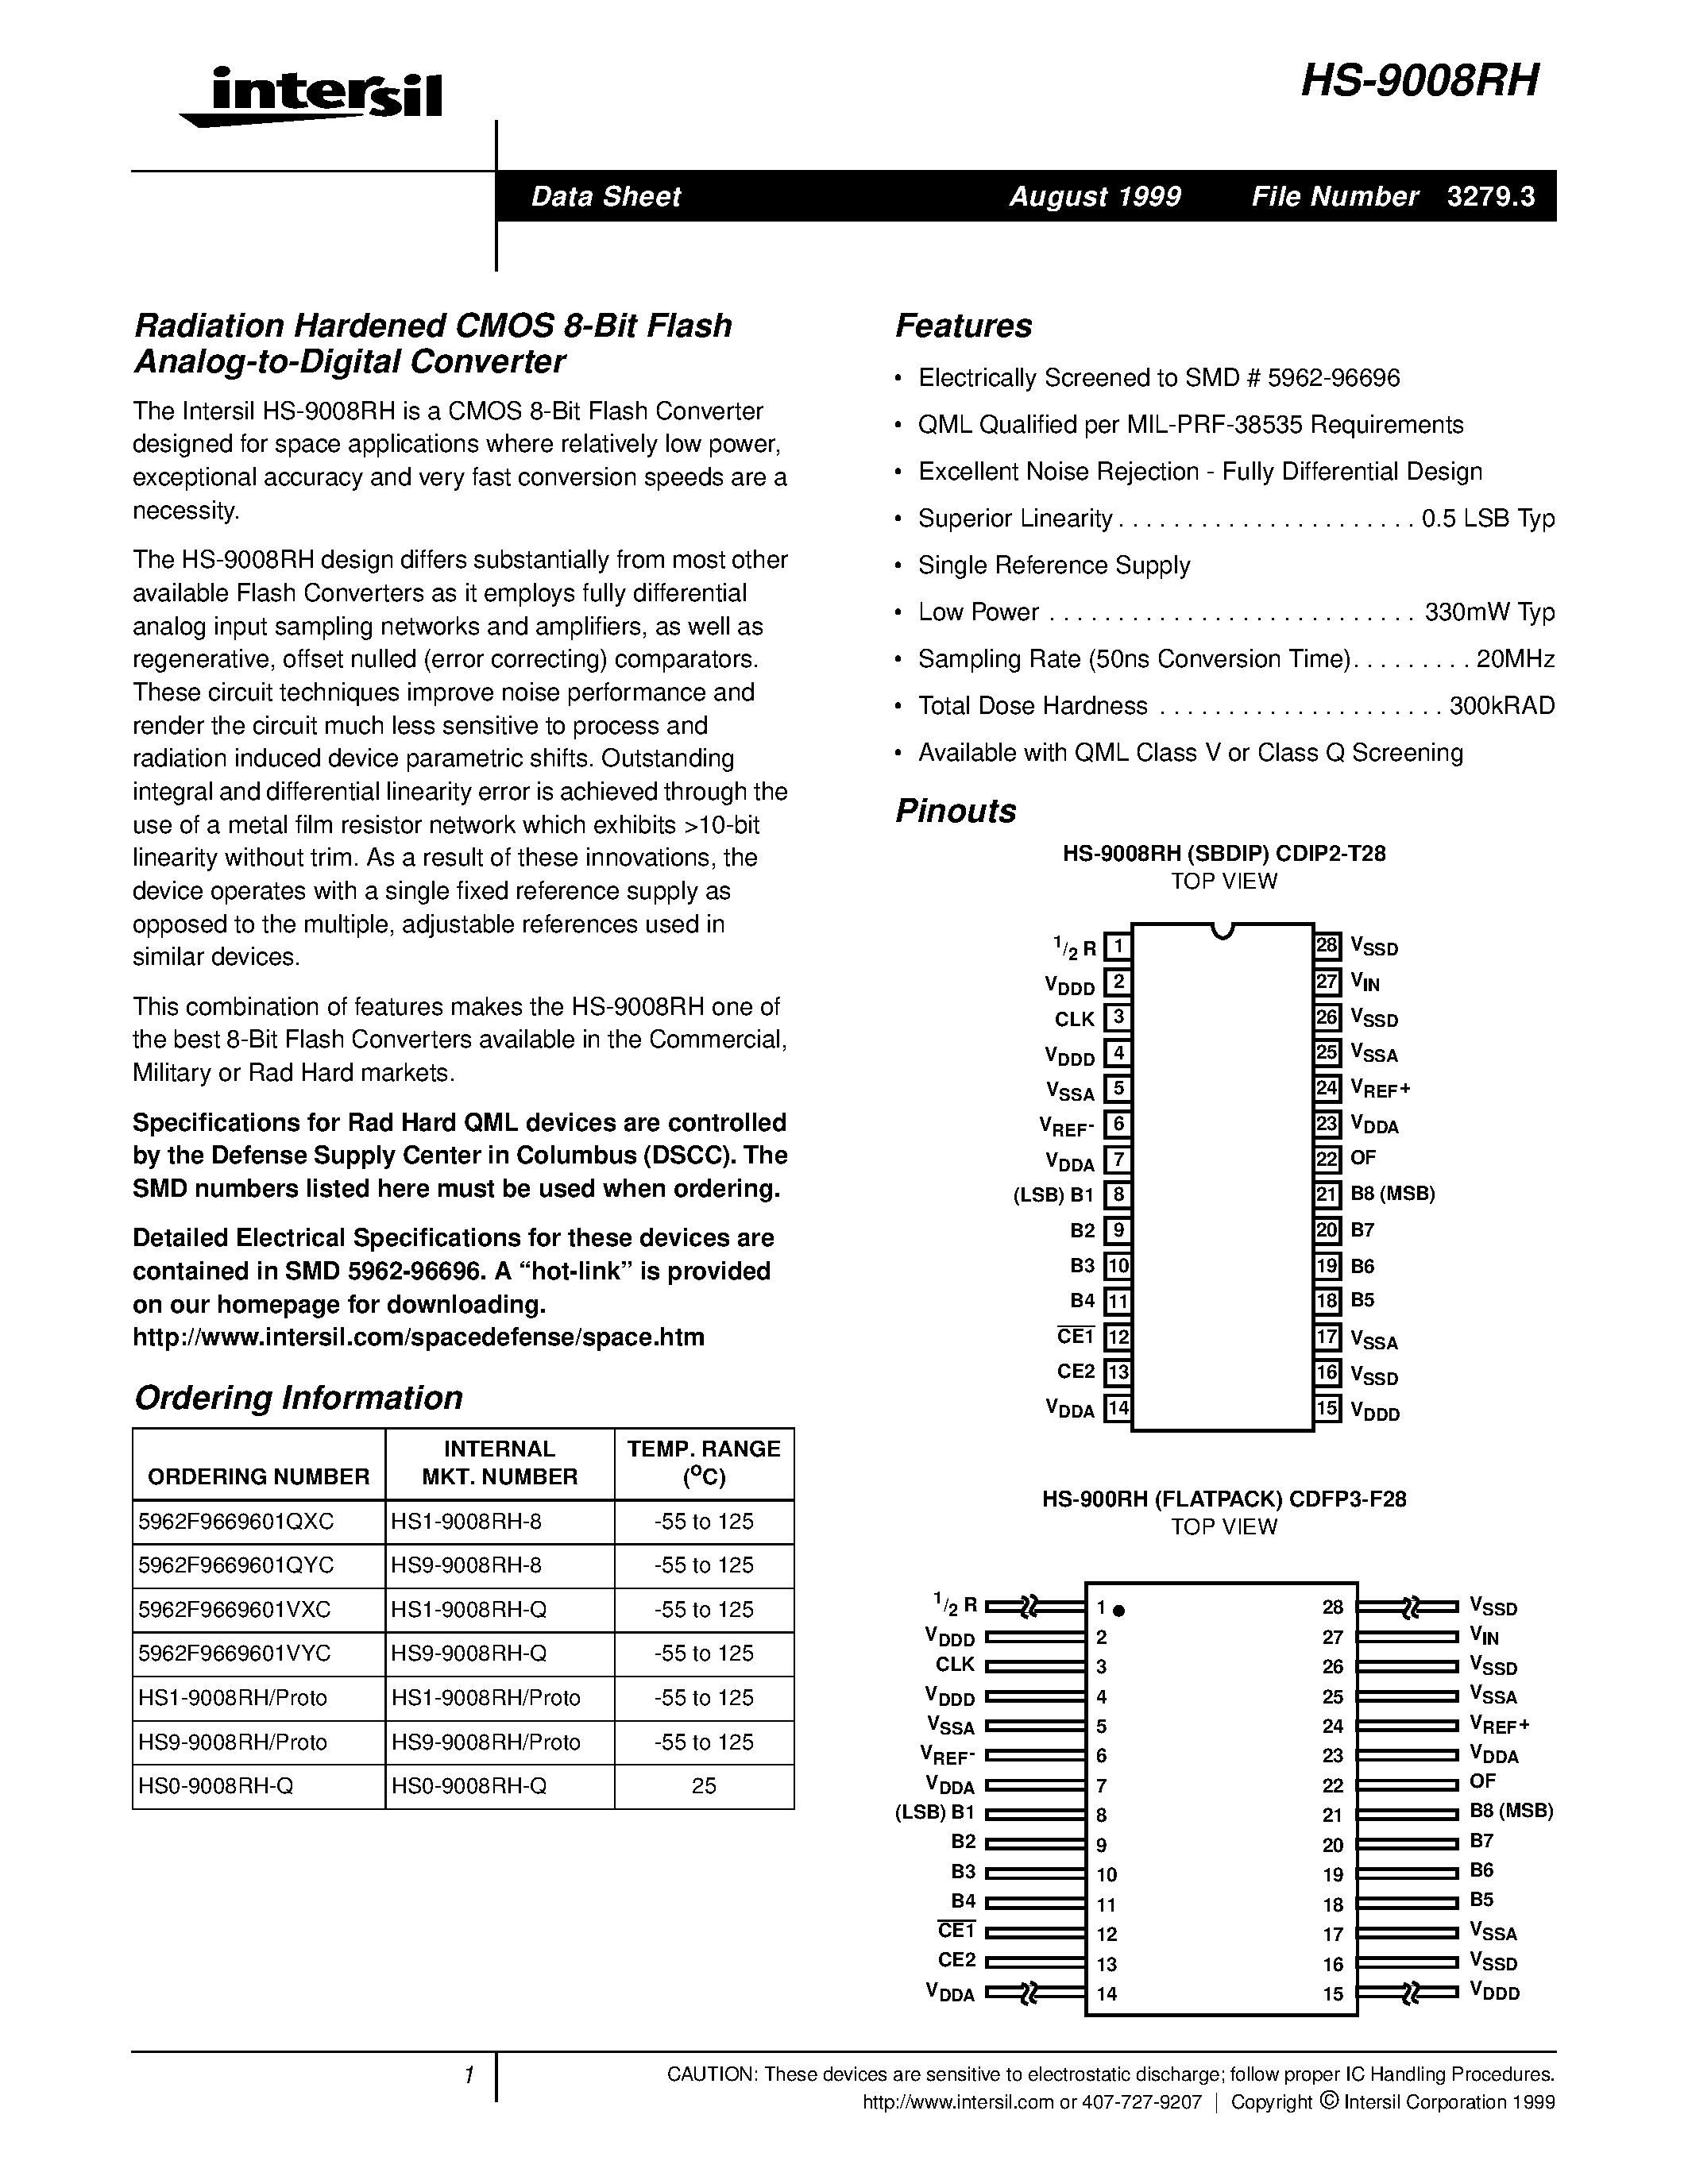 Datasheet HS1-9008RH-Q - Radiation Hardened CMOS 8-Bit Flash Analog-to-Digital Converter page 1